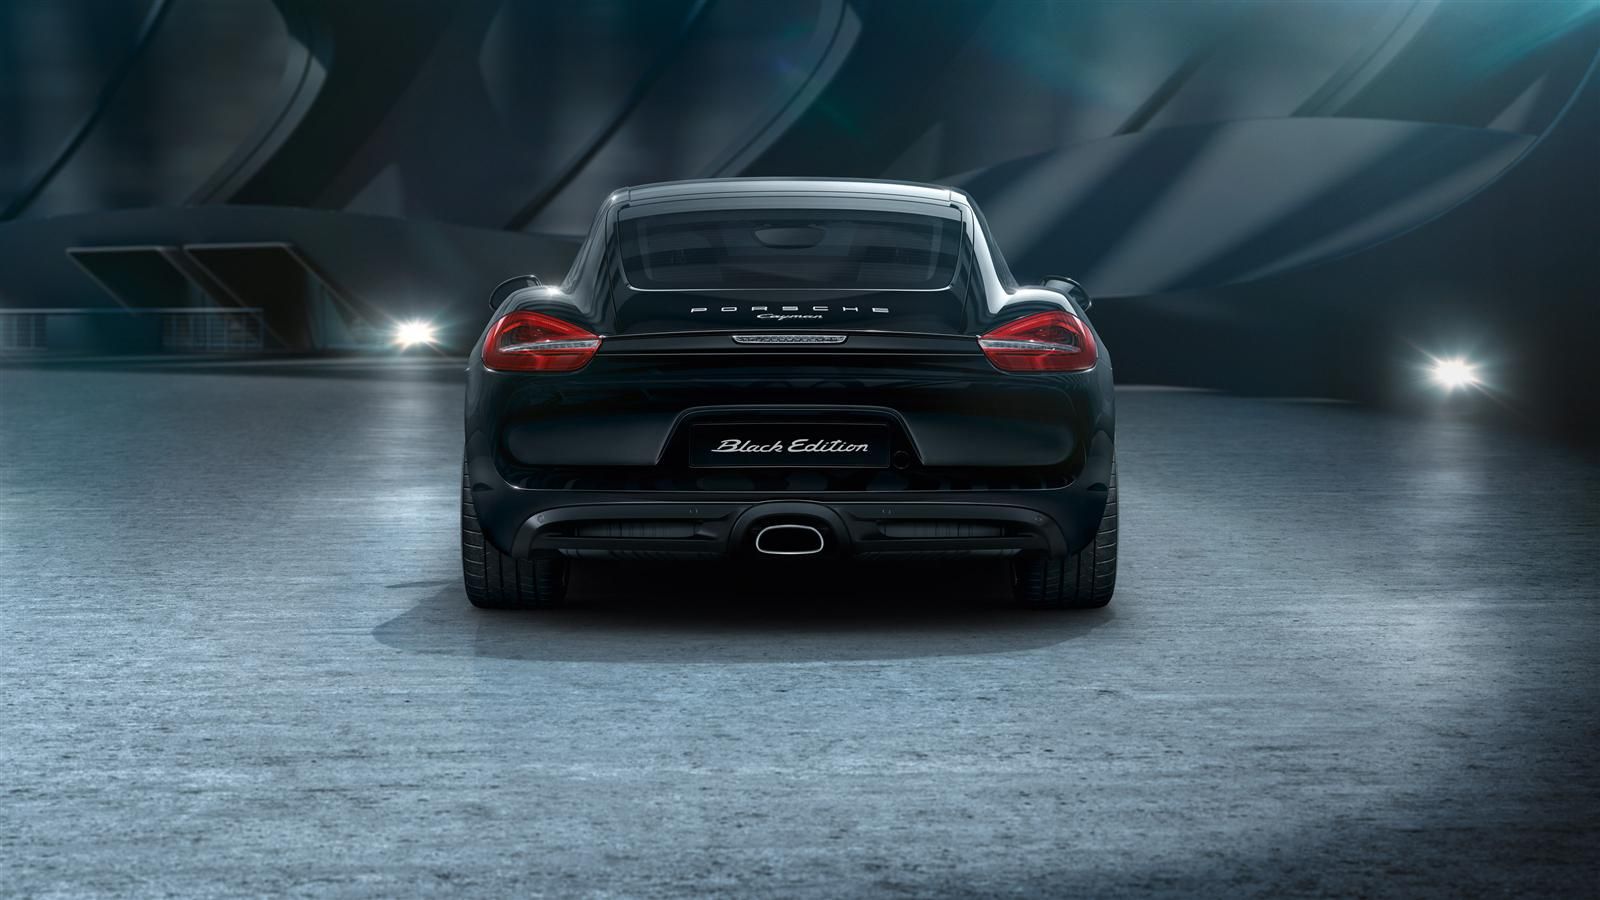 2016 Porsche Cayman Black Edition